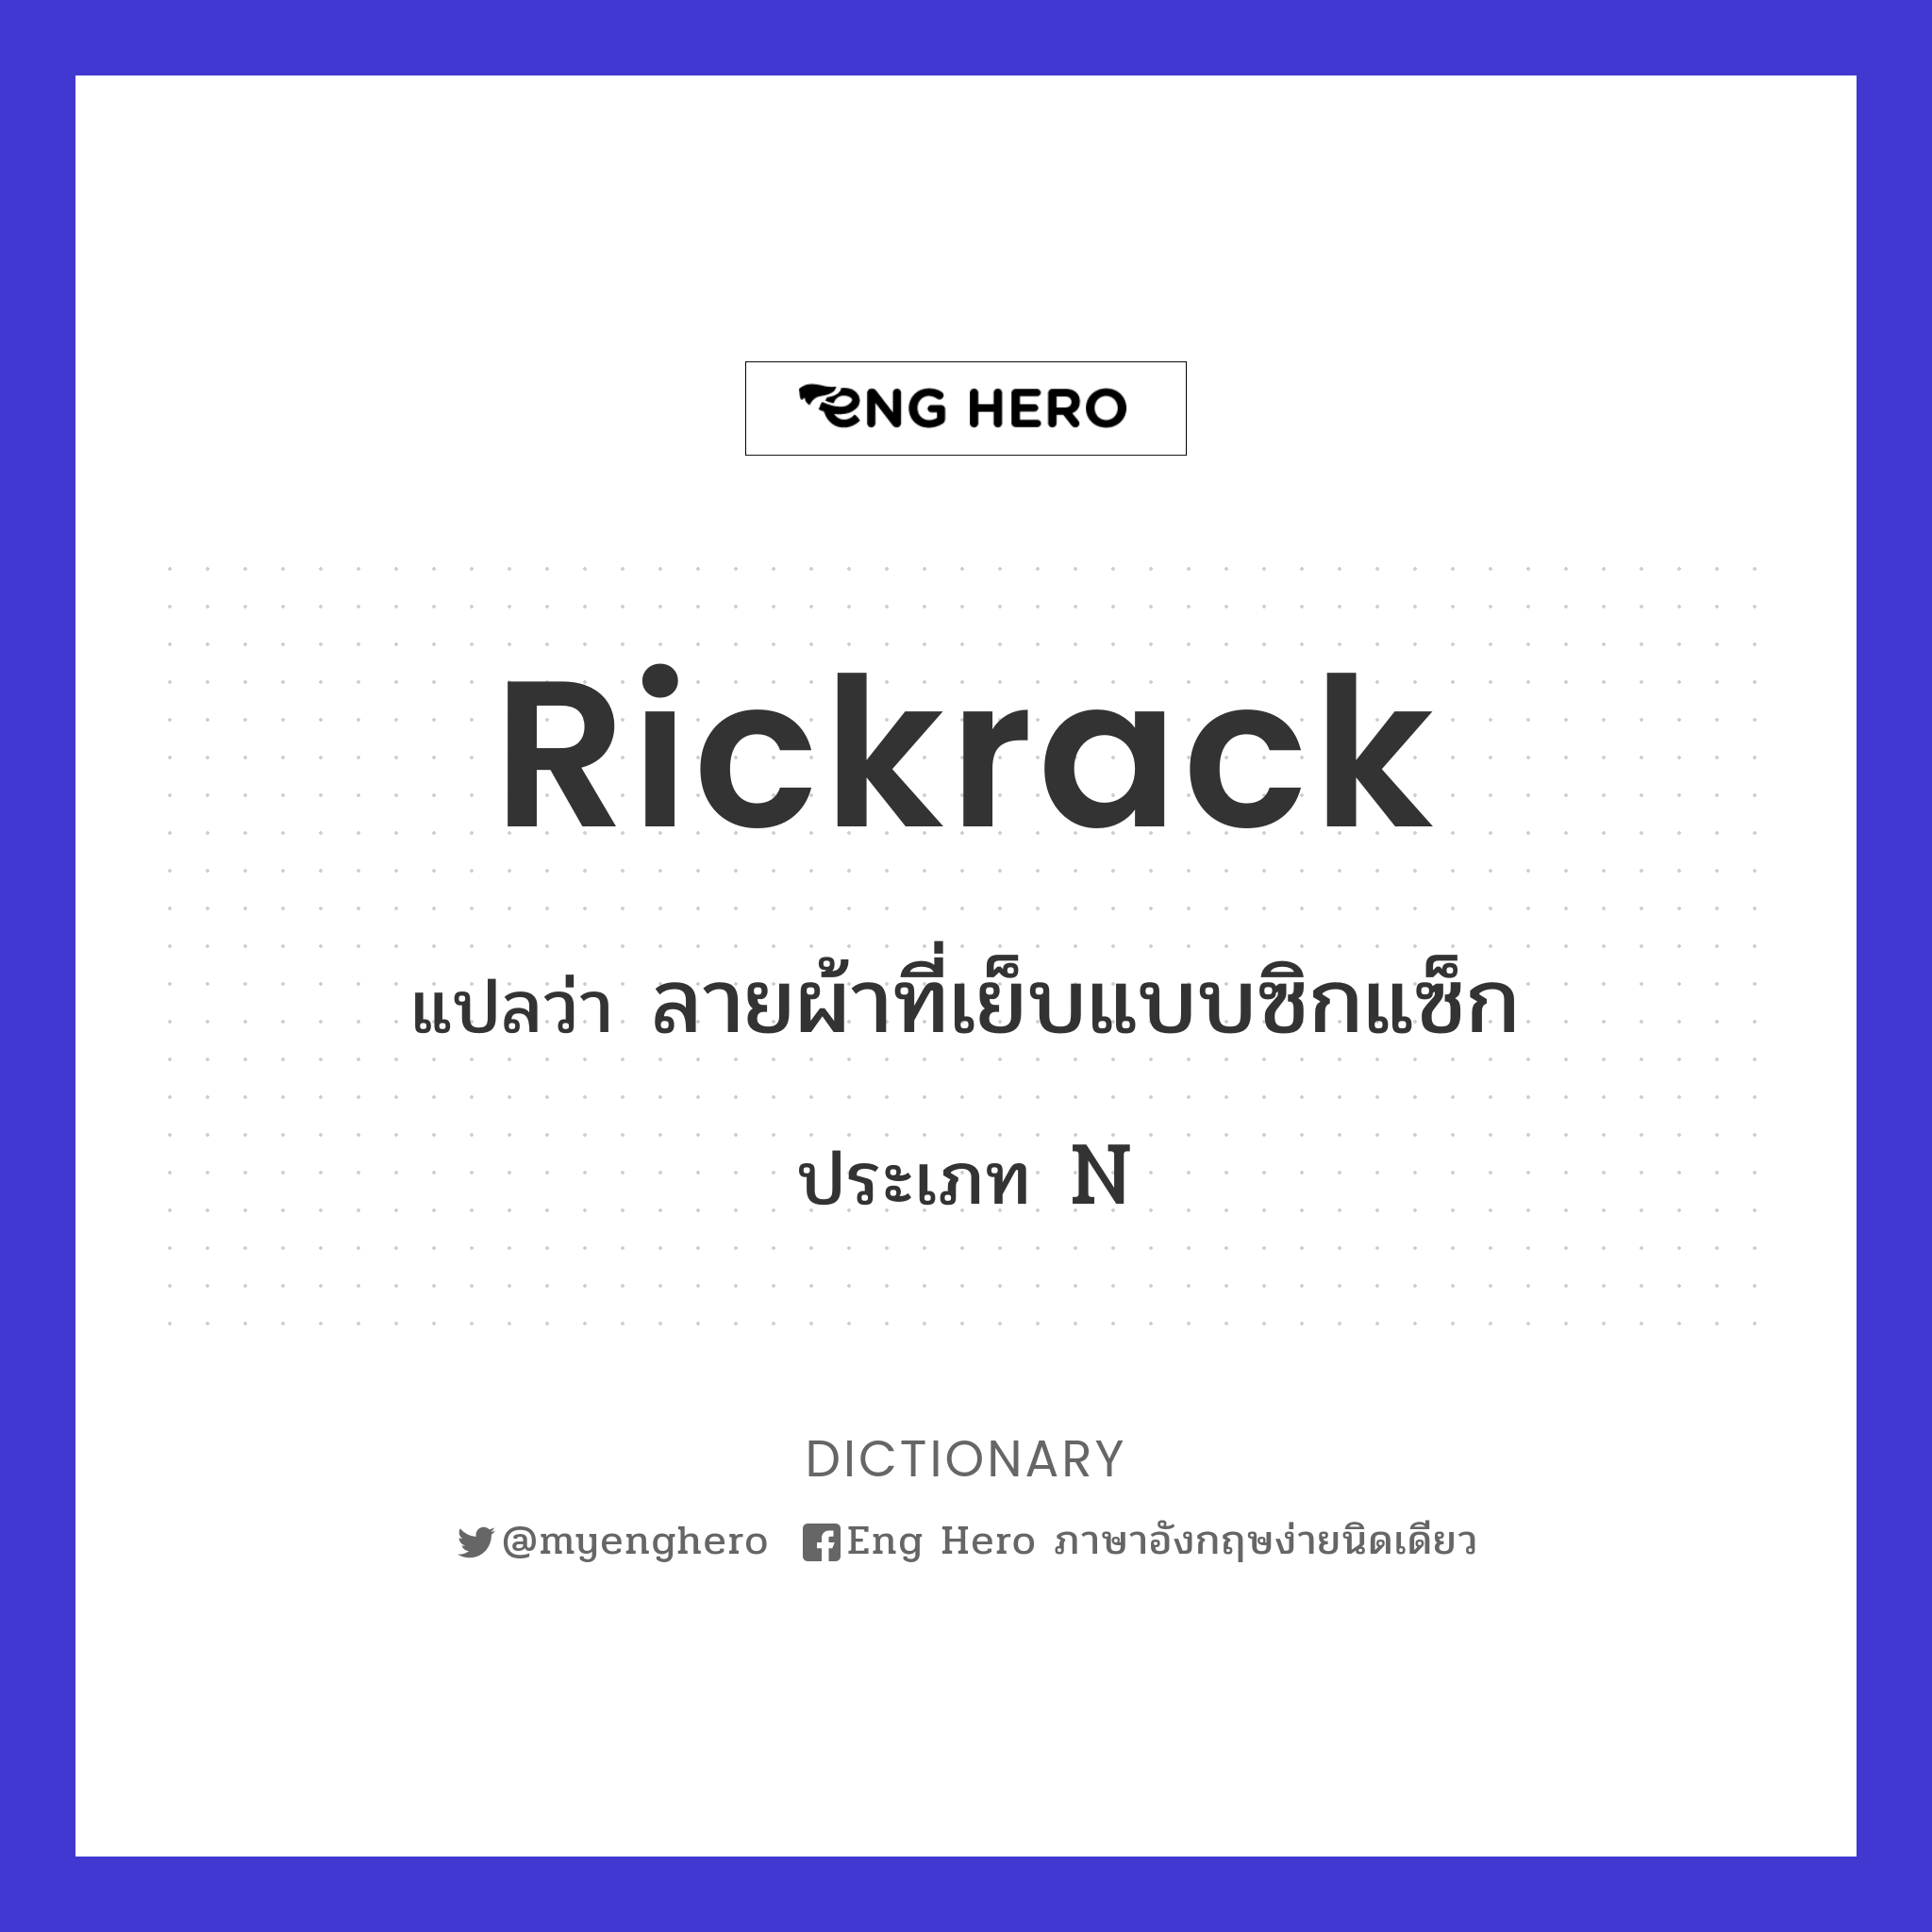 rickrack